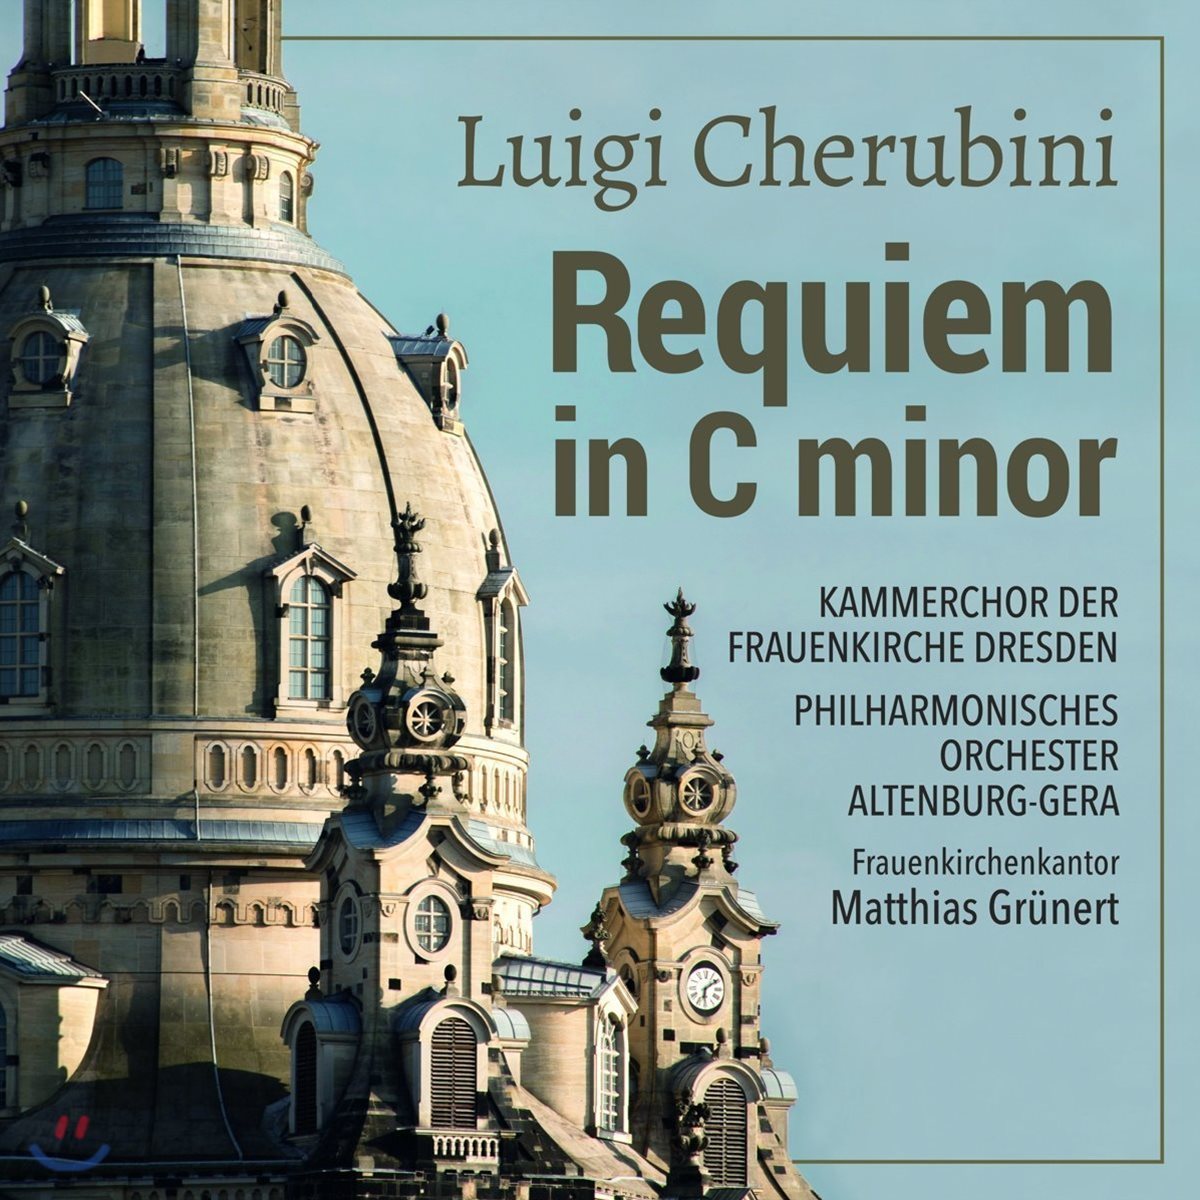 Matthias Grunert 케루비니: 장송 행진곡, 하이든의 죽음에 덧붙인 송가, 레퀴엠 (Cherubini: Requiem In C Minor, Marche Funebre)